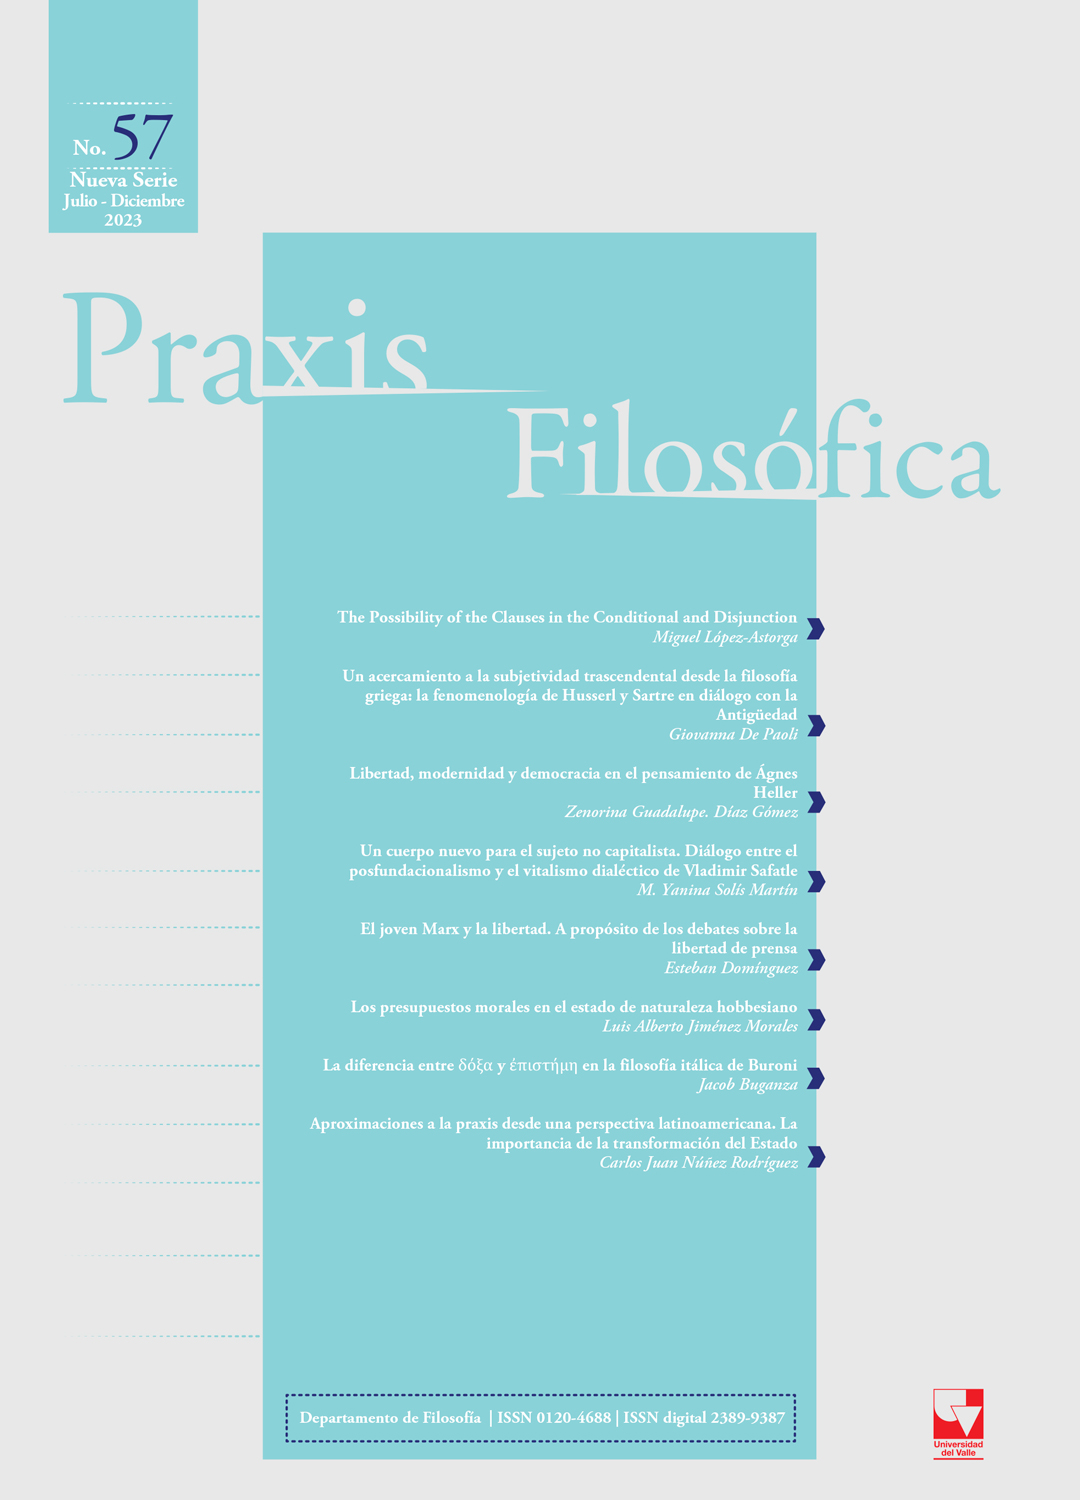 Miniatura de la revista Praxis Filosófica